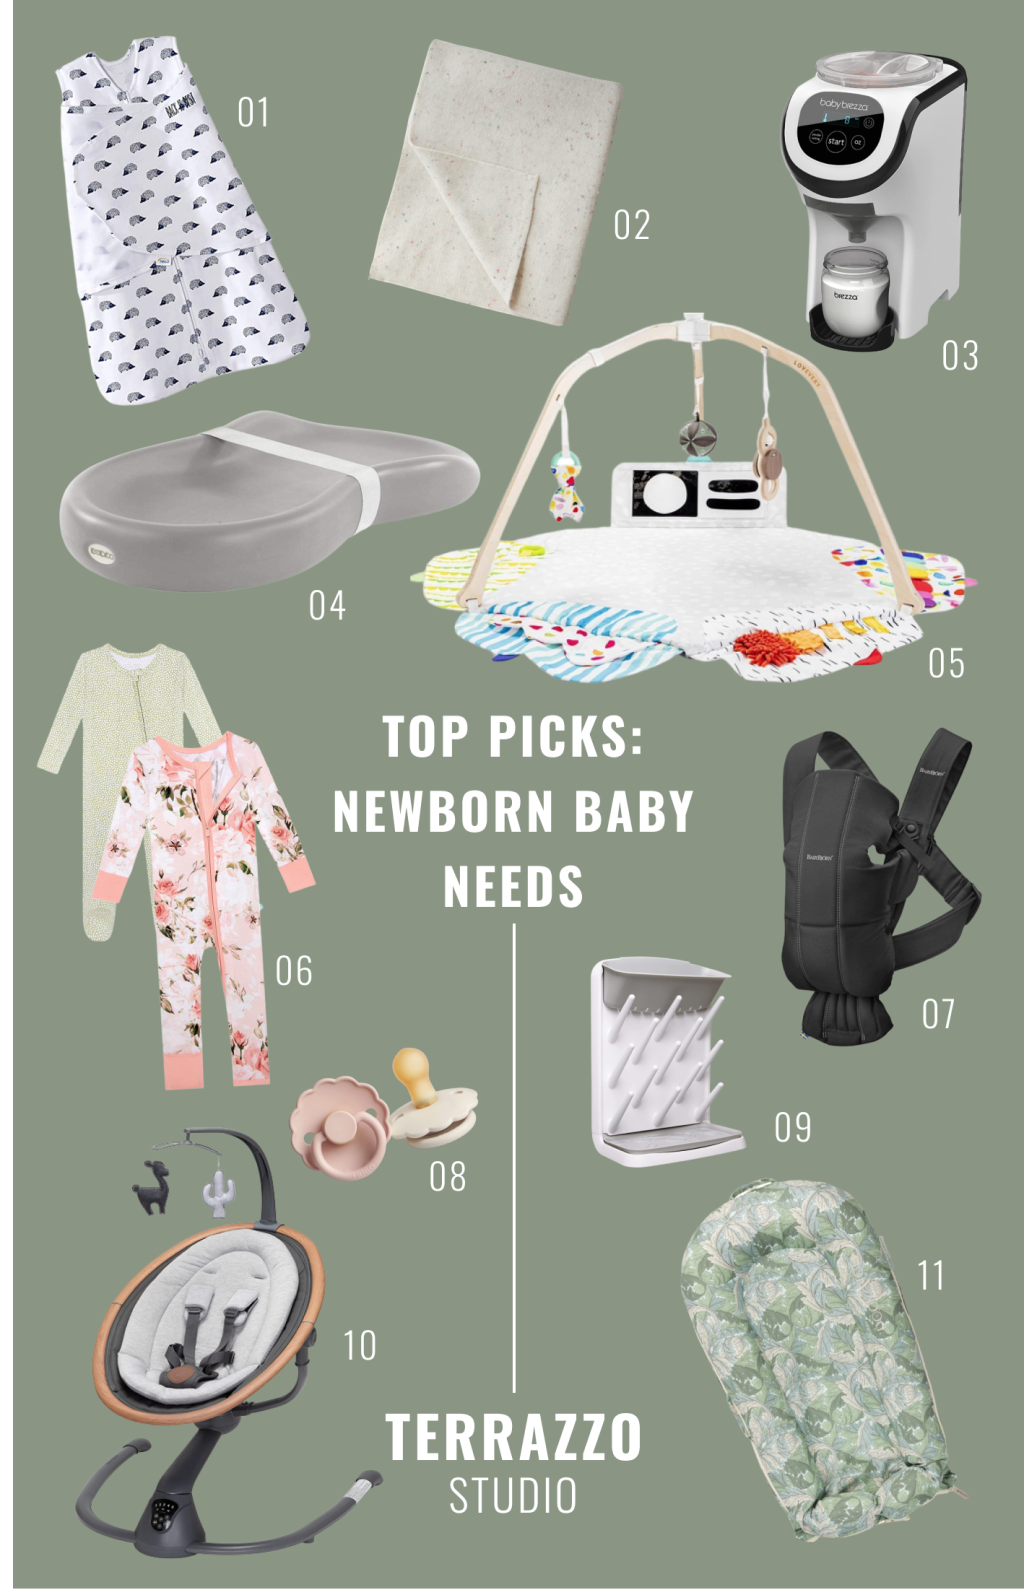 Top Picks: Newborn Baby Needs